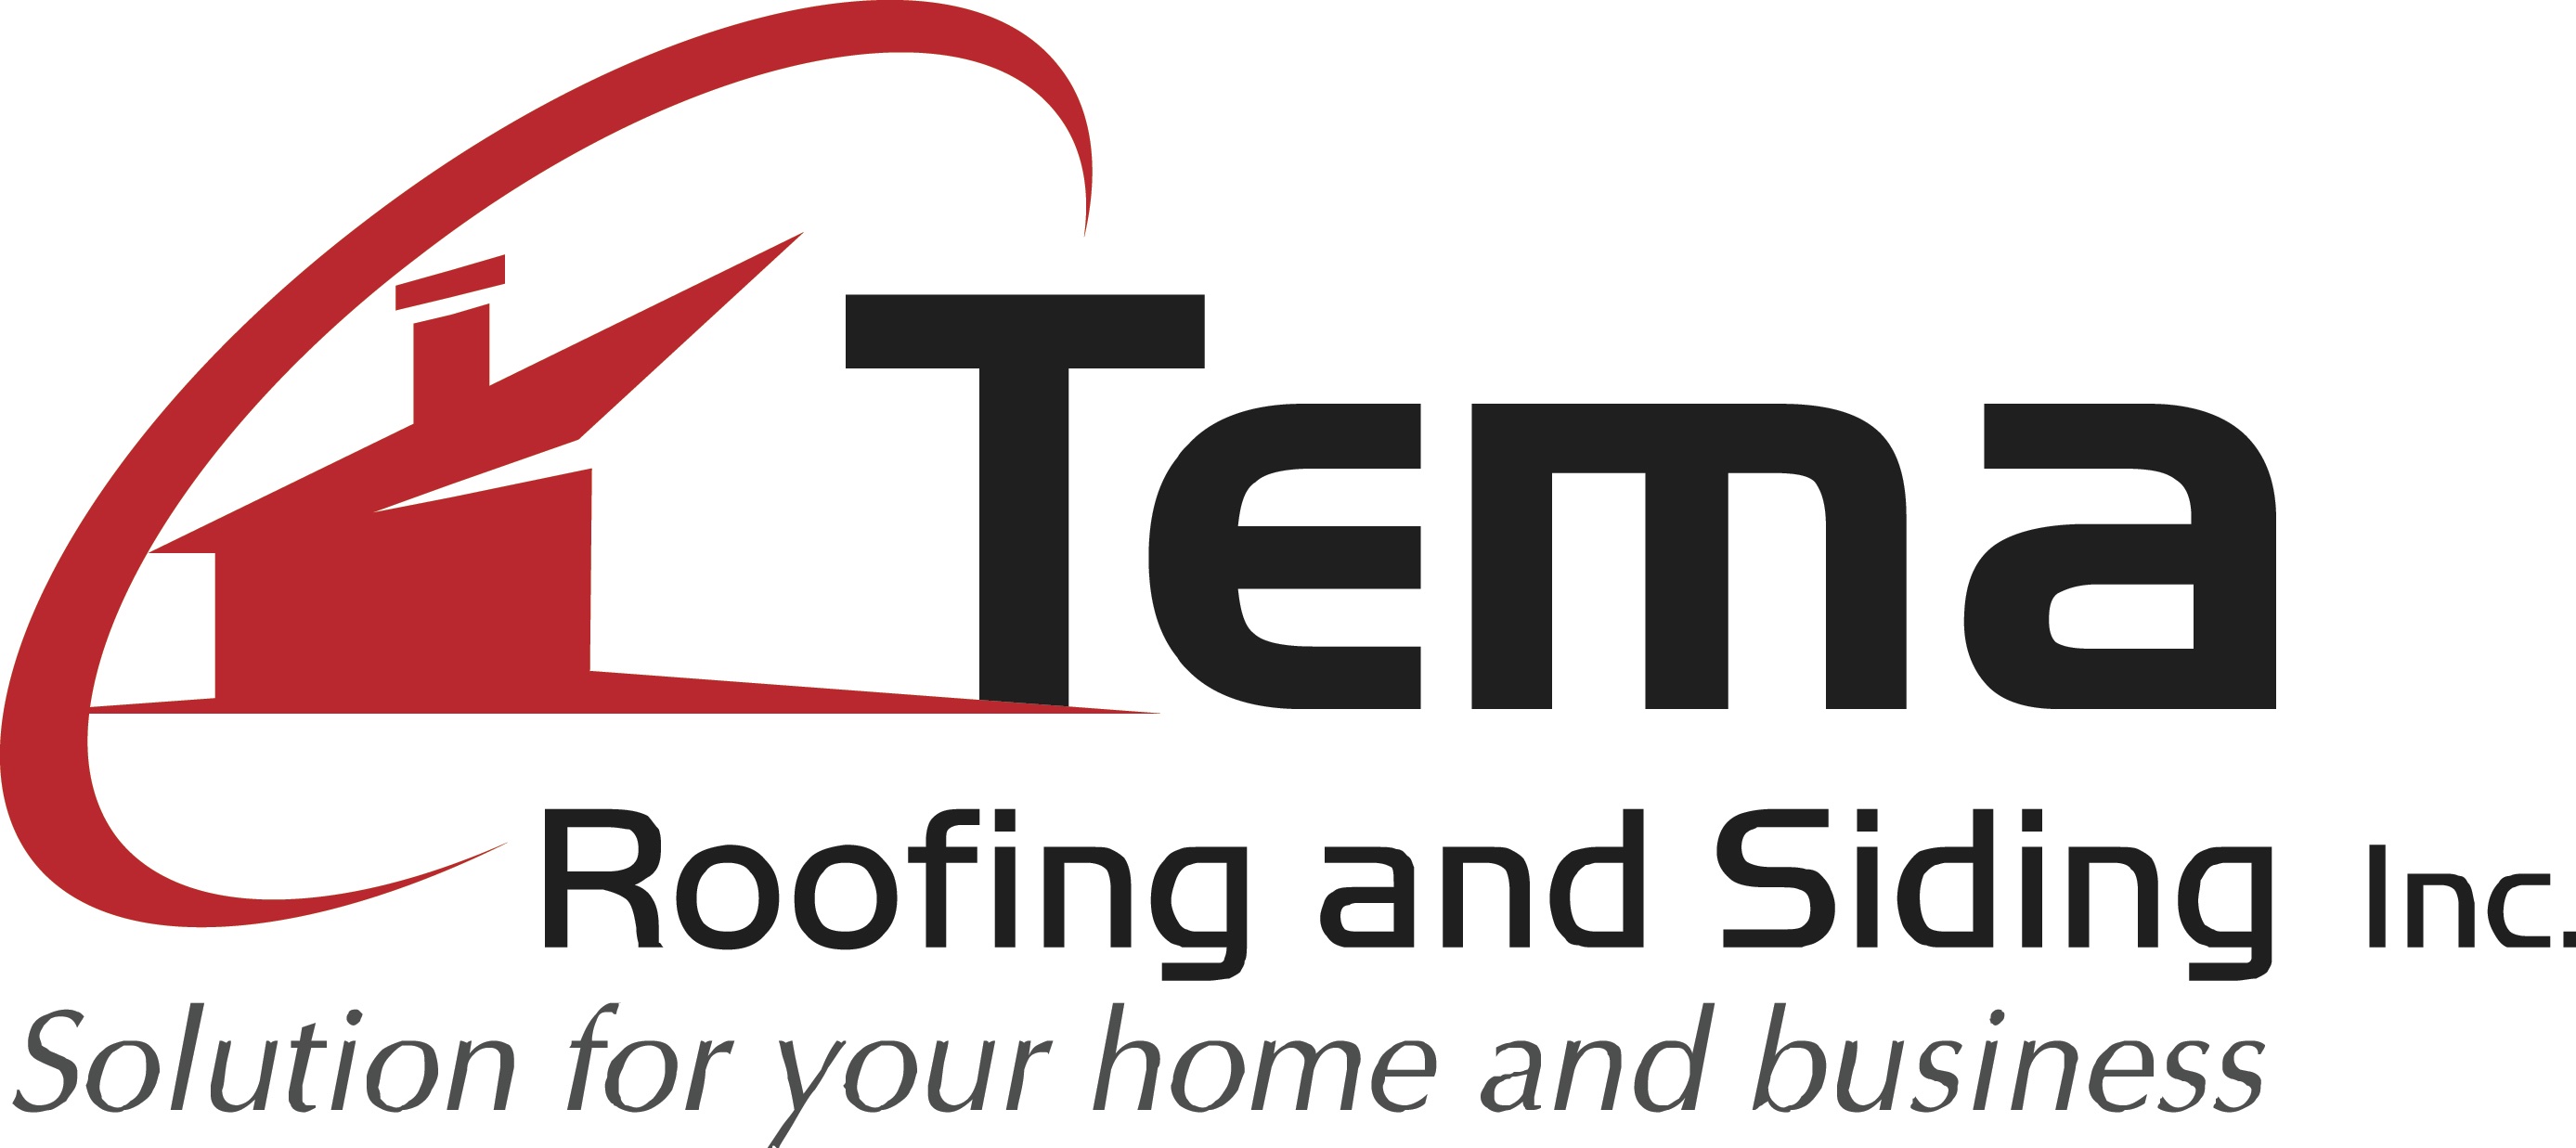 Tema Roofing and Siding, Inc Logo